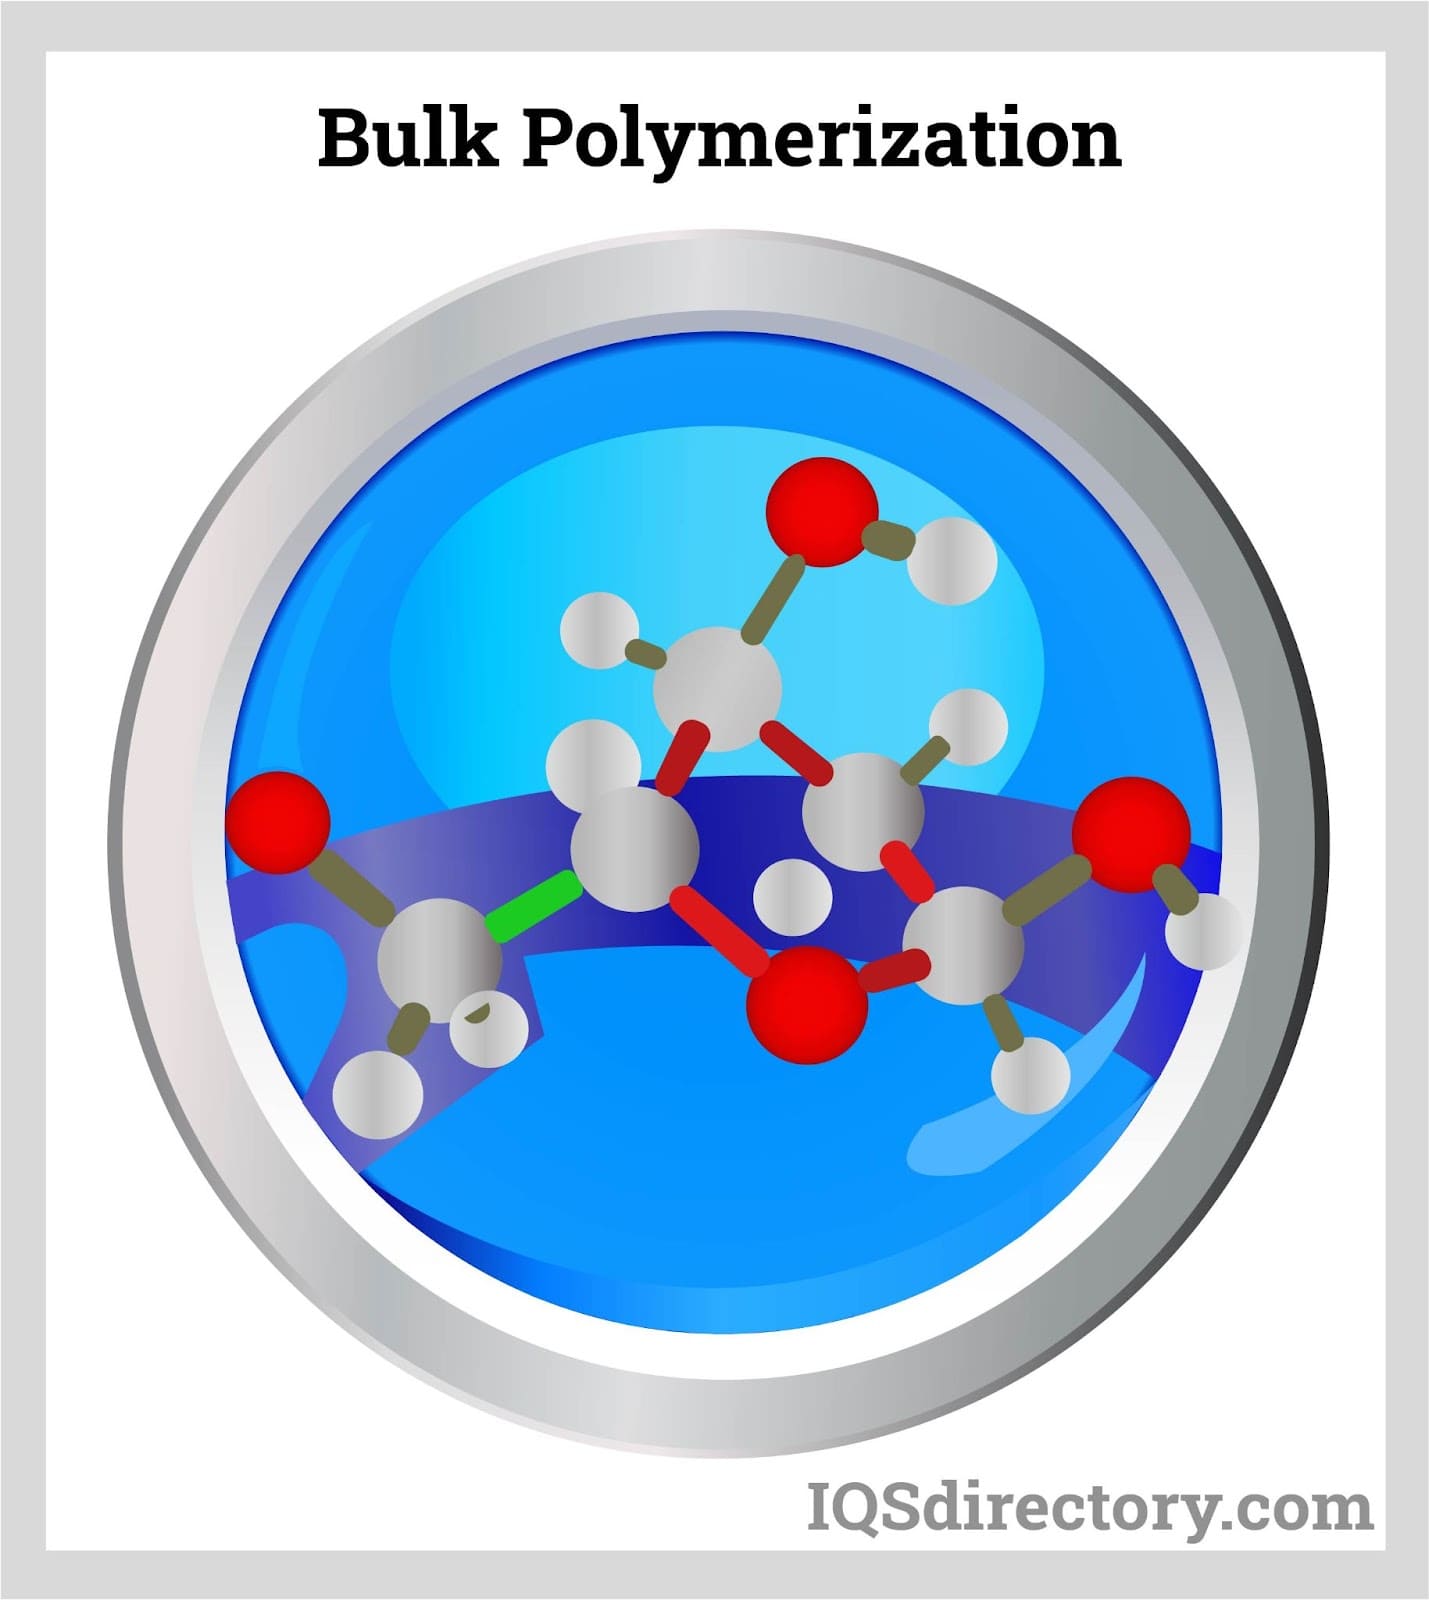 Bulk Polymerization